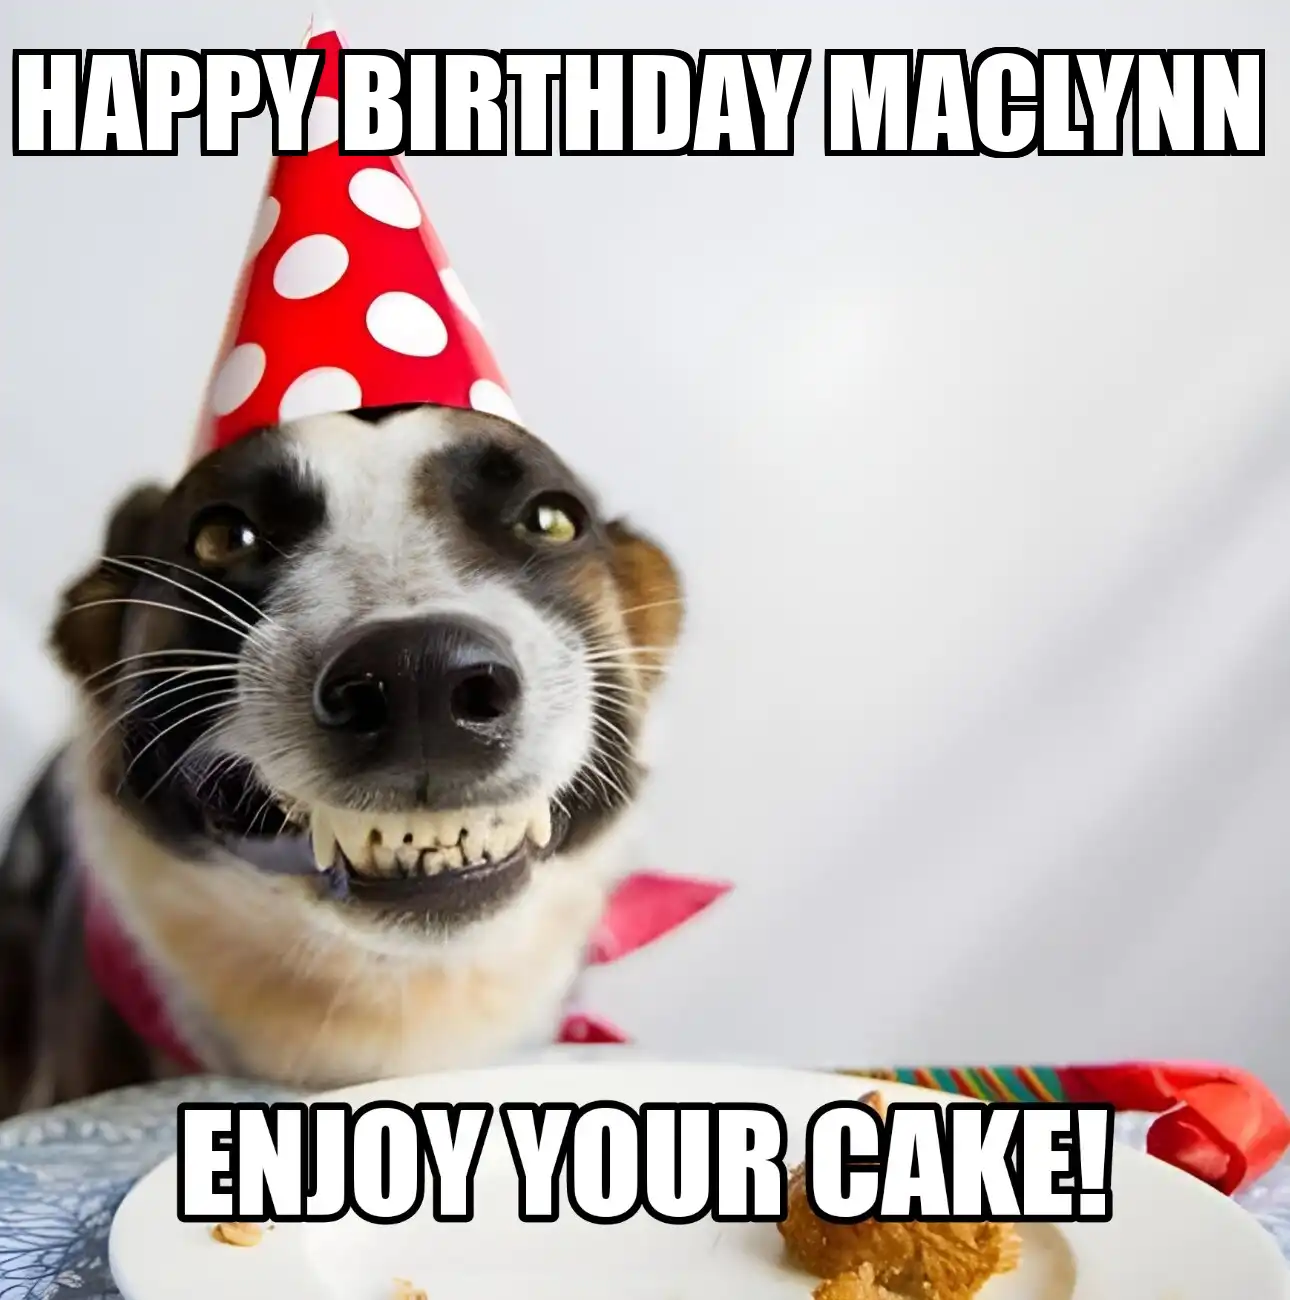 Happy Birthday Maclynn Enjoy Your Cake Dog Meme